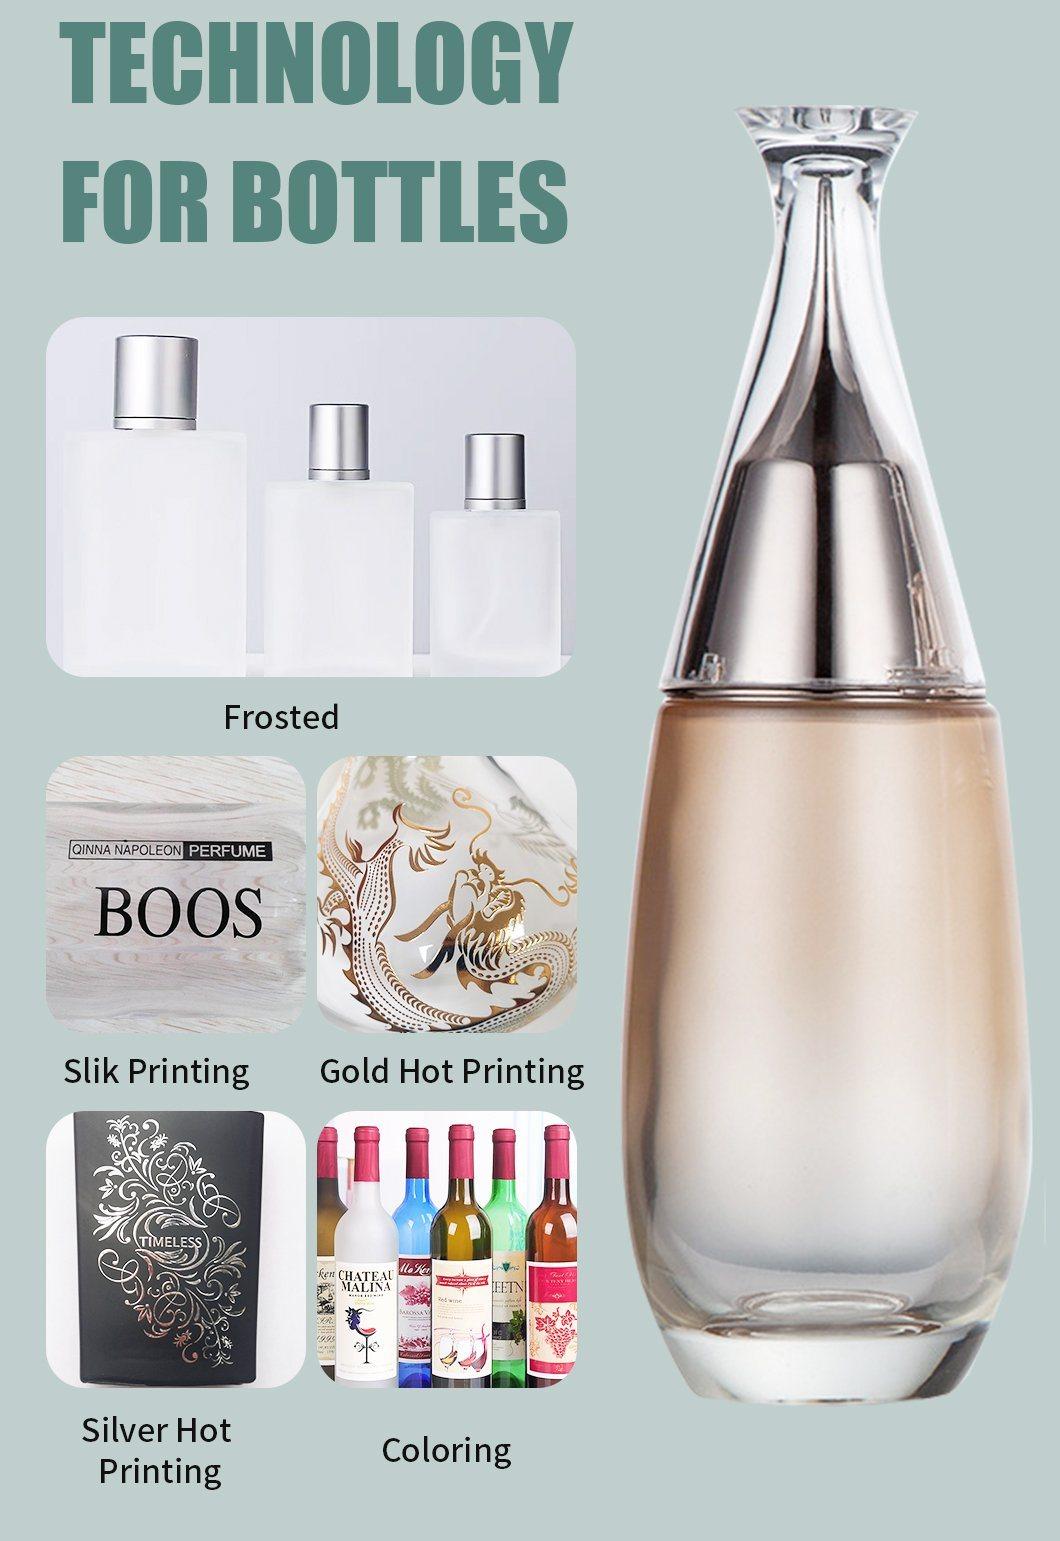 Silver Cap Screw Neck Transparent Cosmetics Glass Bottles for Attar Fragrance